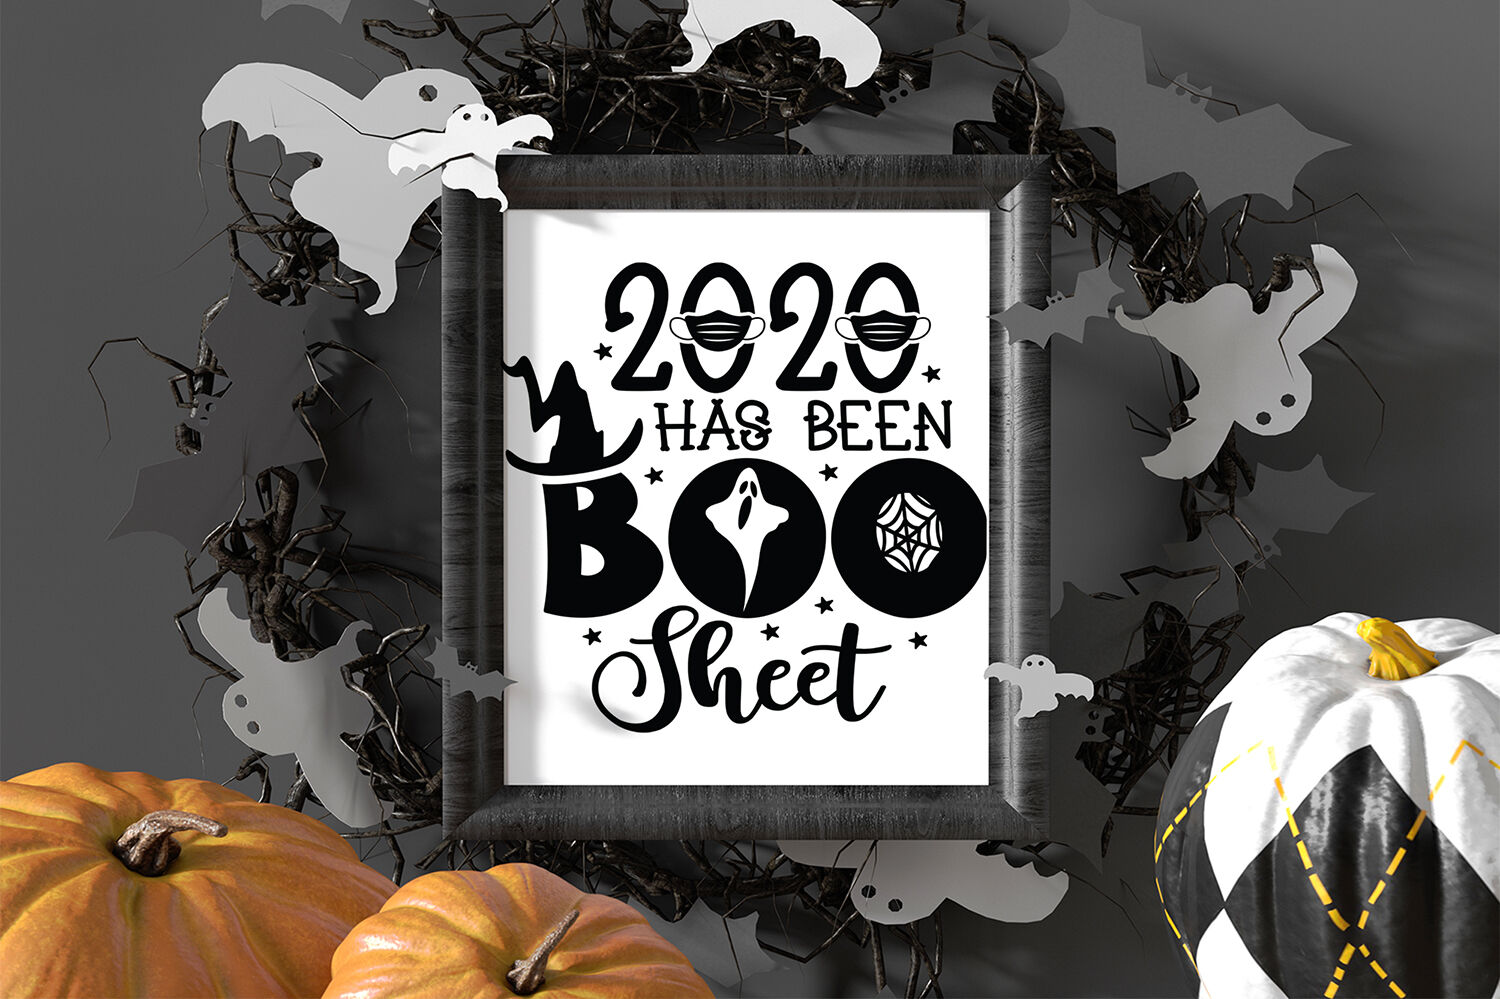 Download 2020 Has Been Boo Sheet, Halloween SVG, Halloween Quotes ...